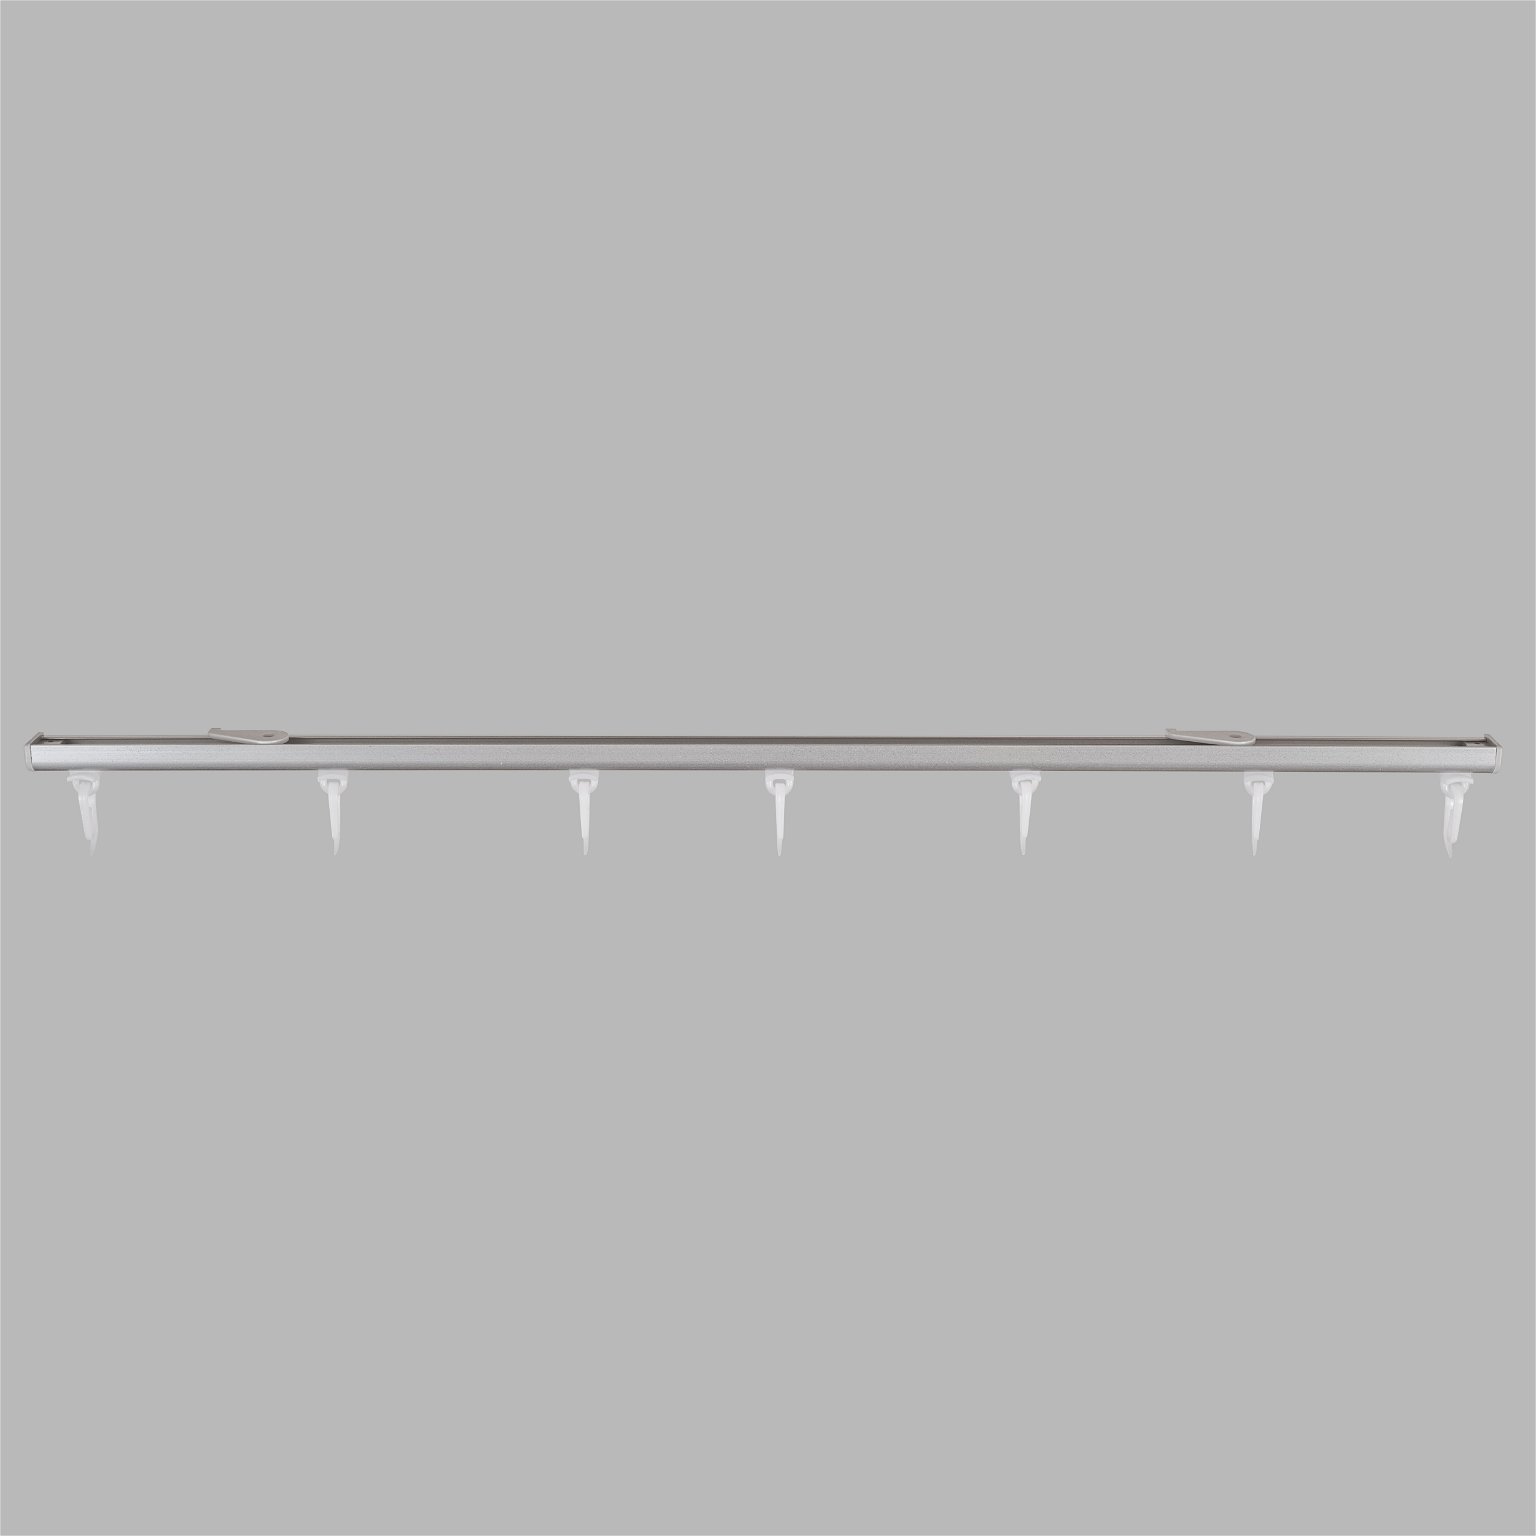 Aliuminio profilis D, matinio chromo sp., 200 cm, sukomplektuotas